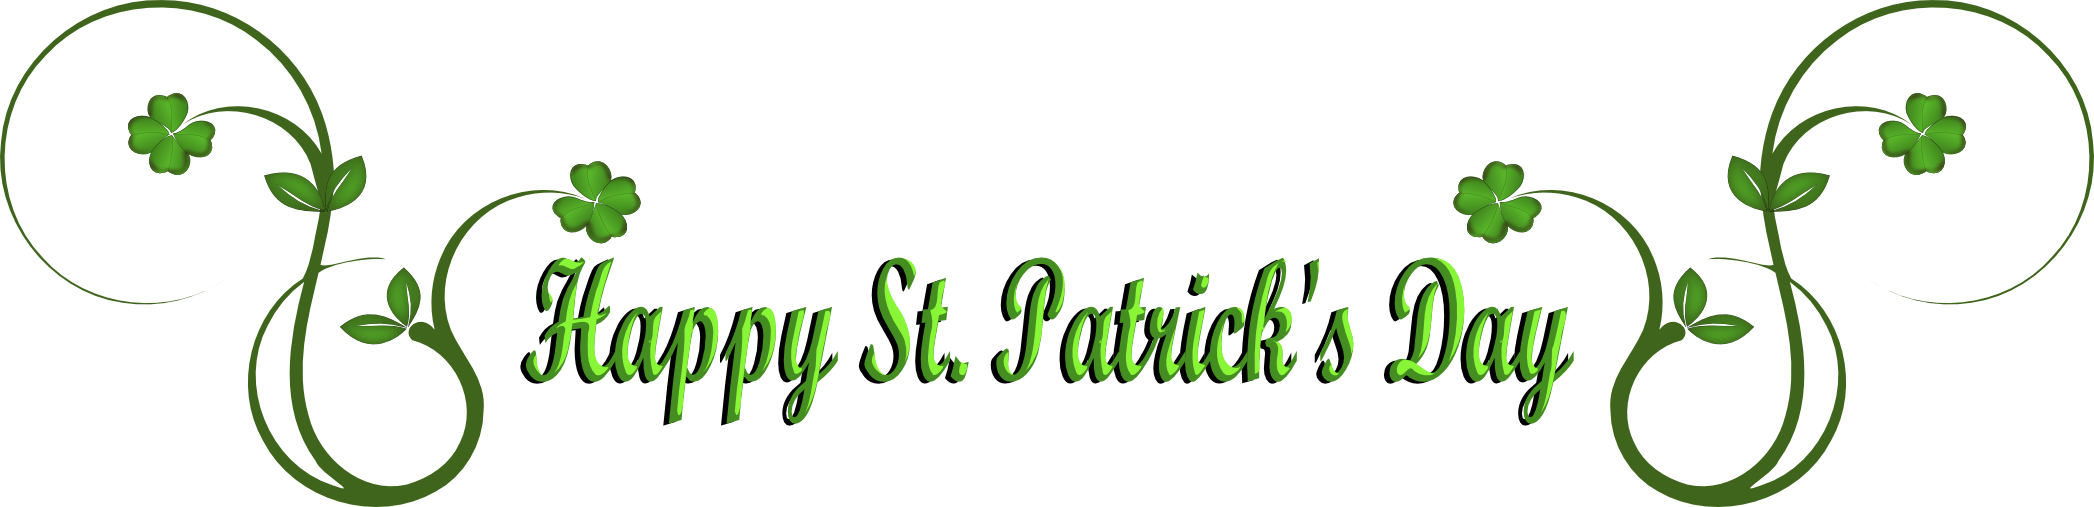 Saint Patricks Day Transparent Png All